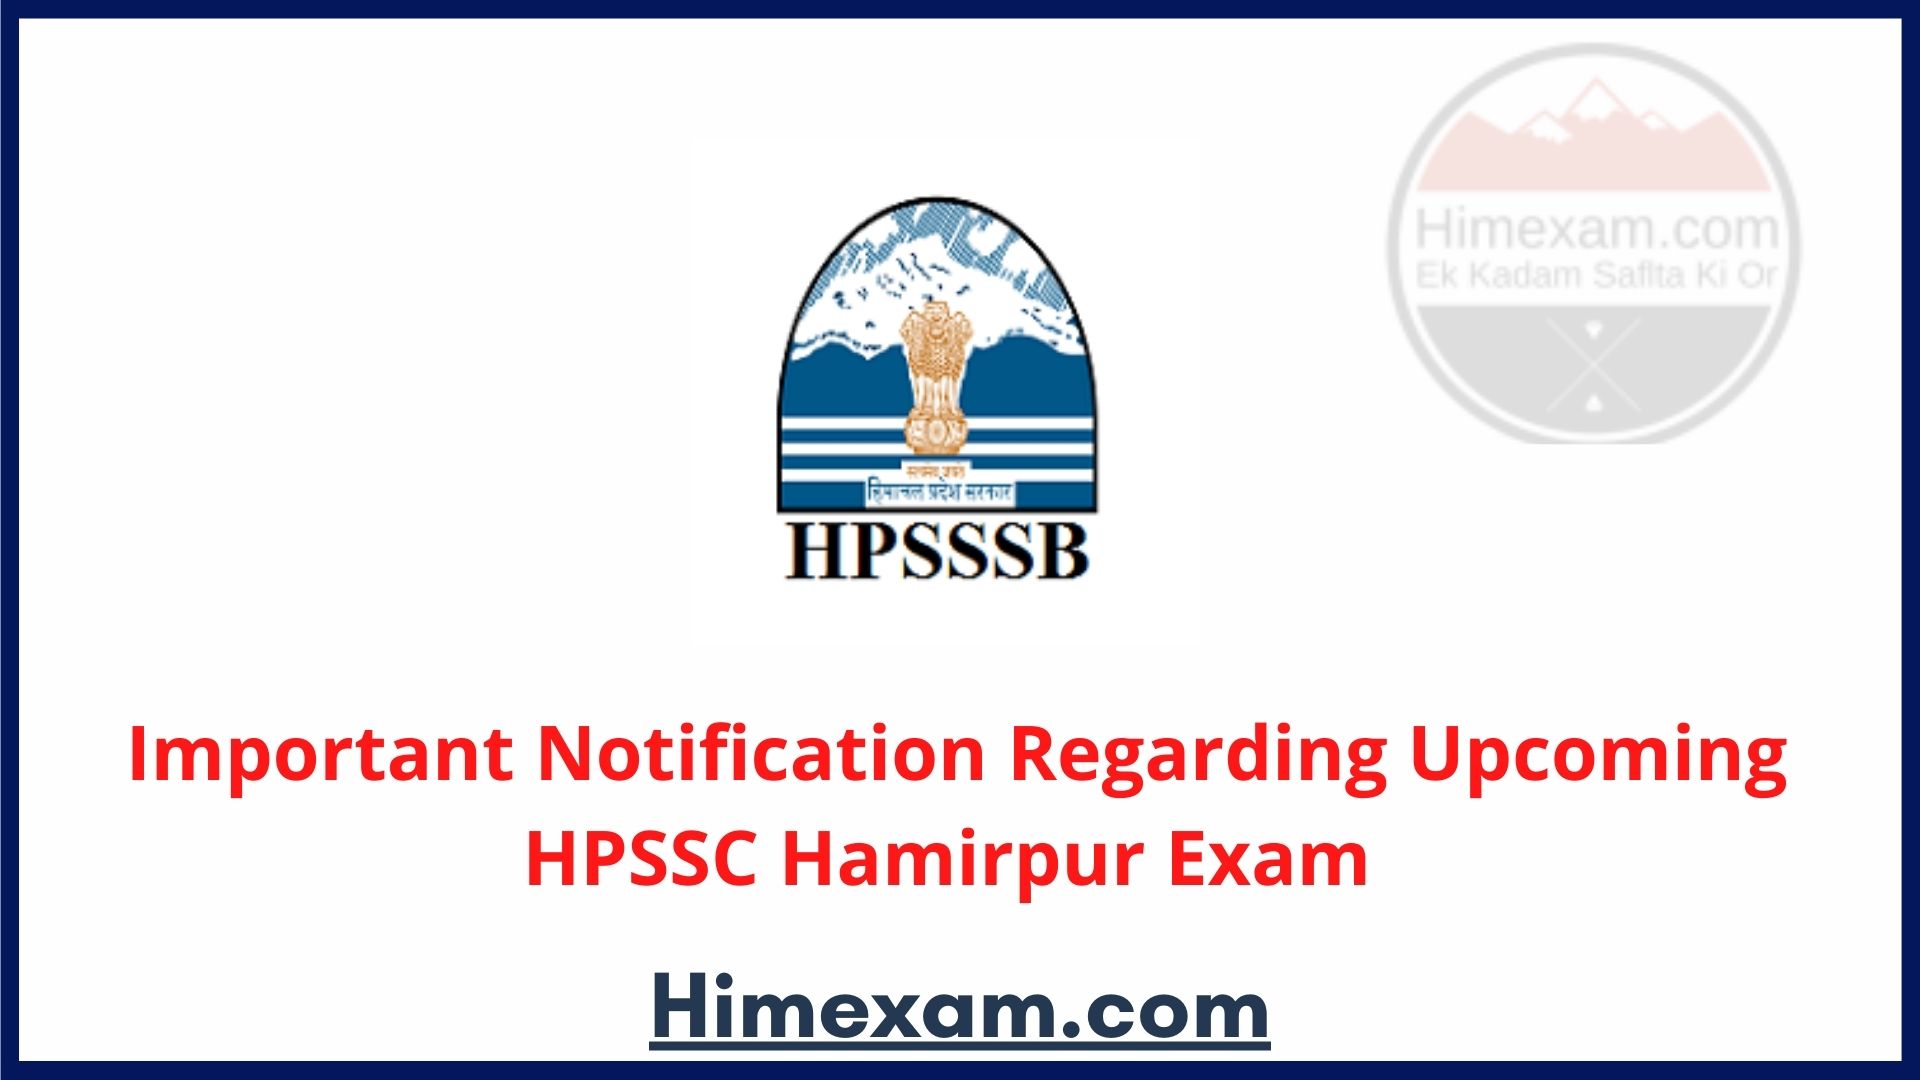 Important Notification Regarding Upcoming HPSSC Hamirpur Exam